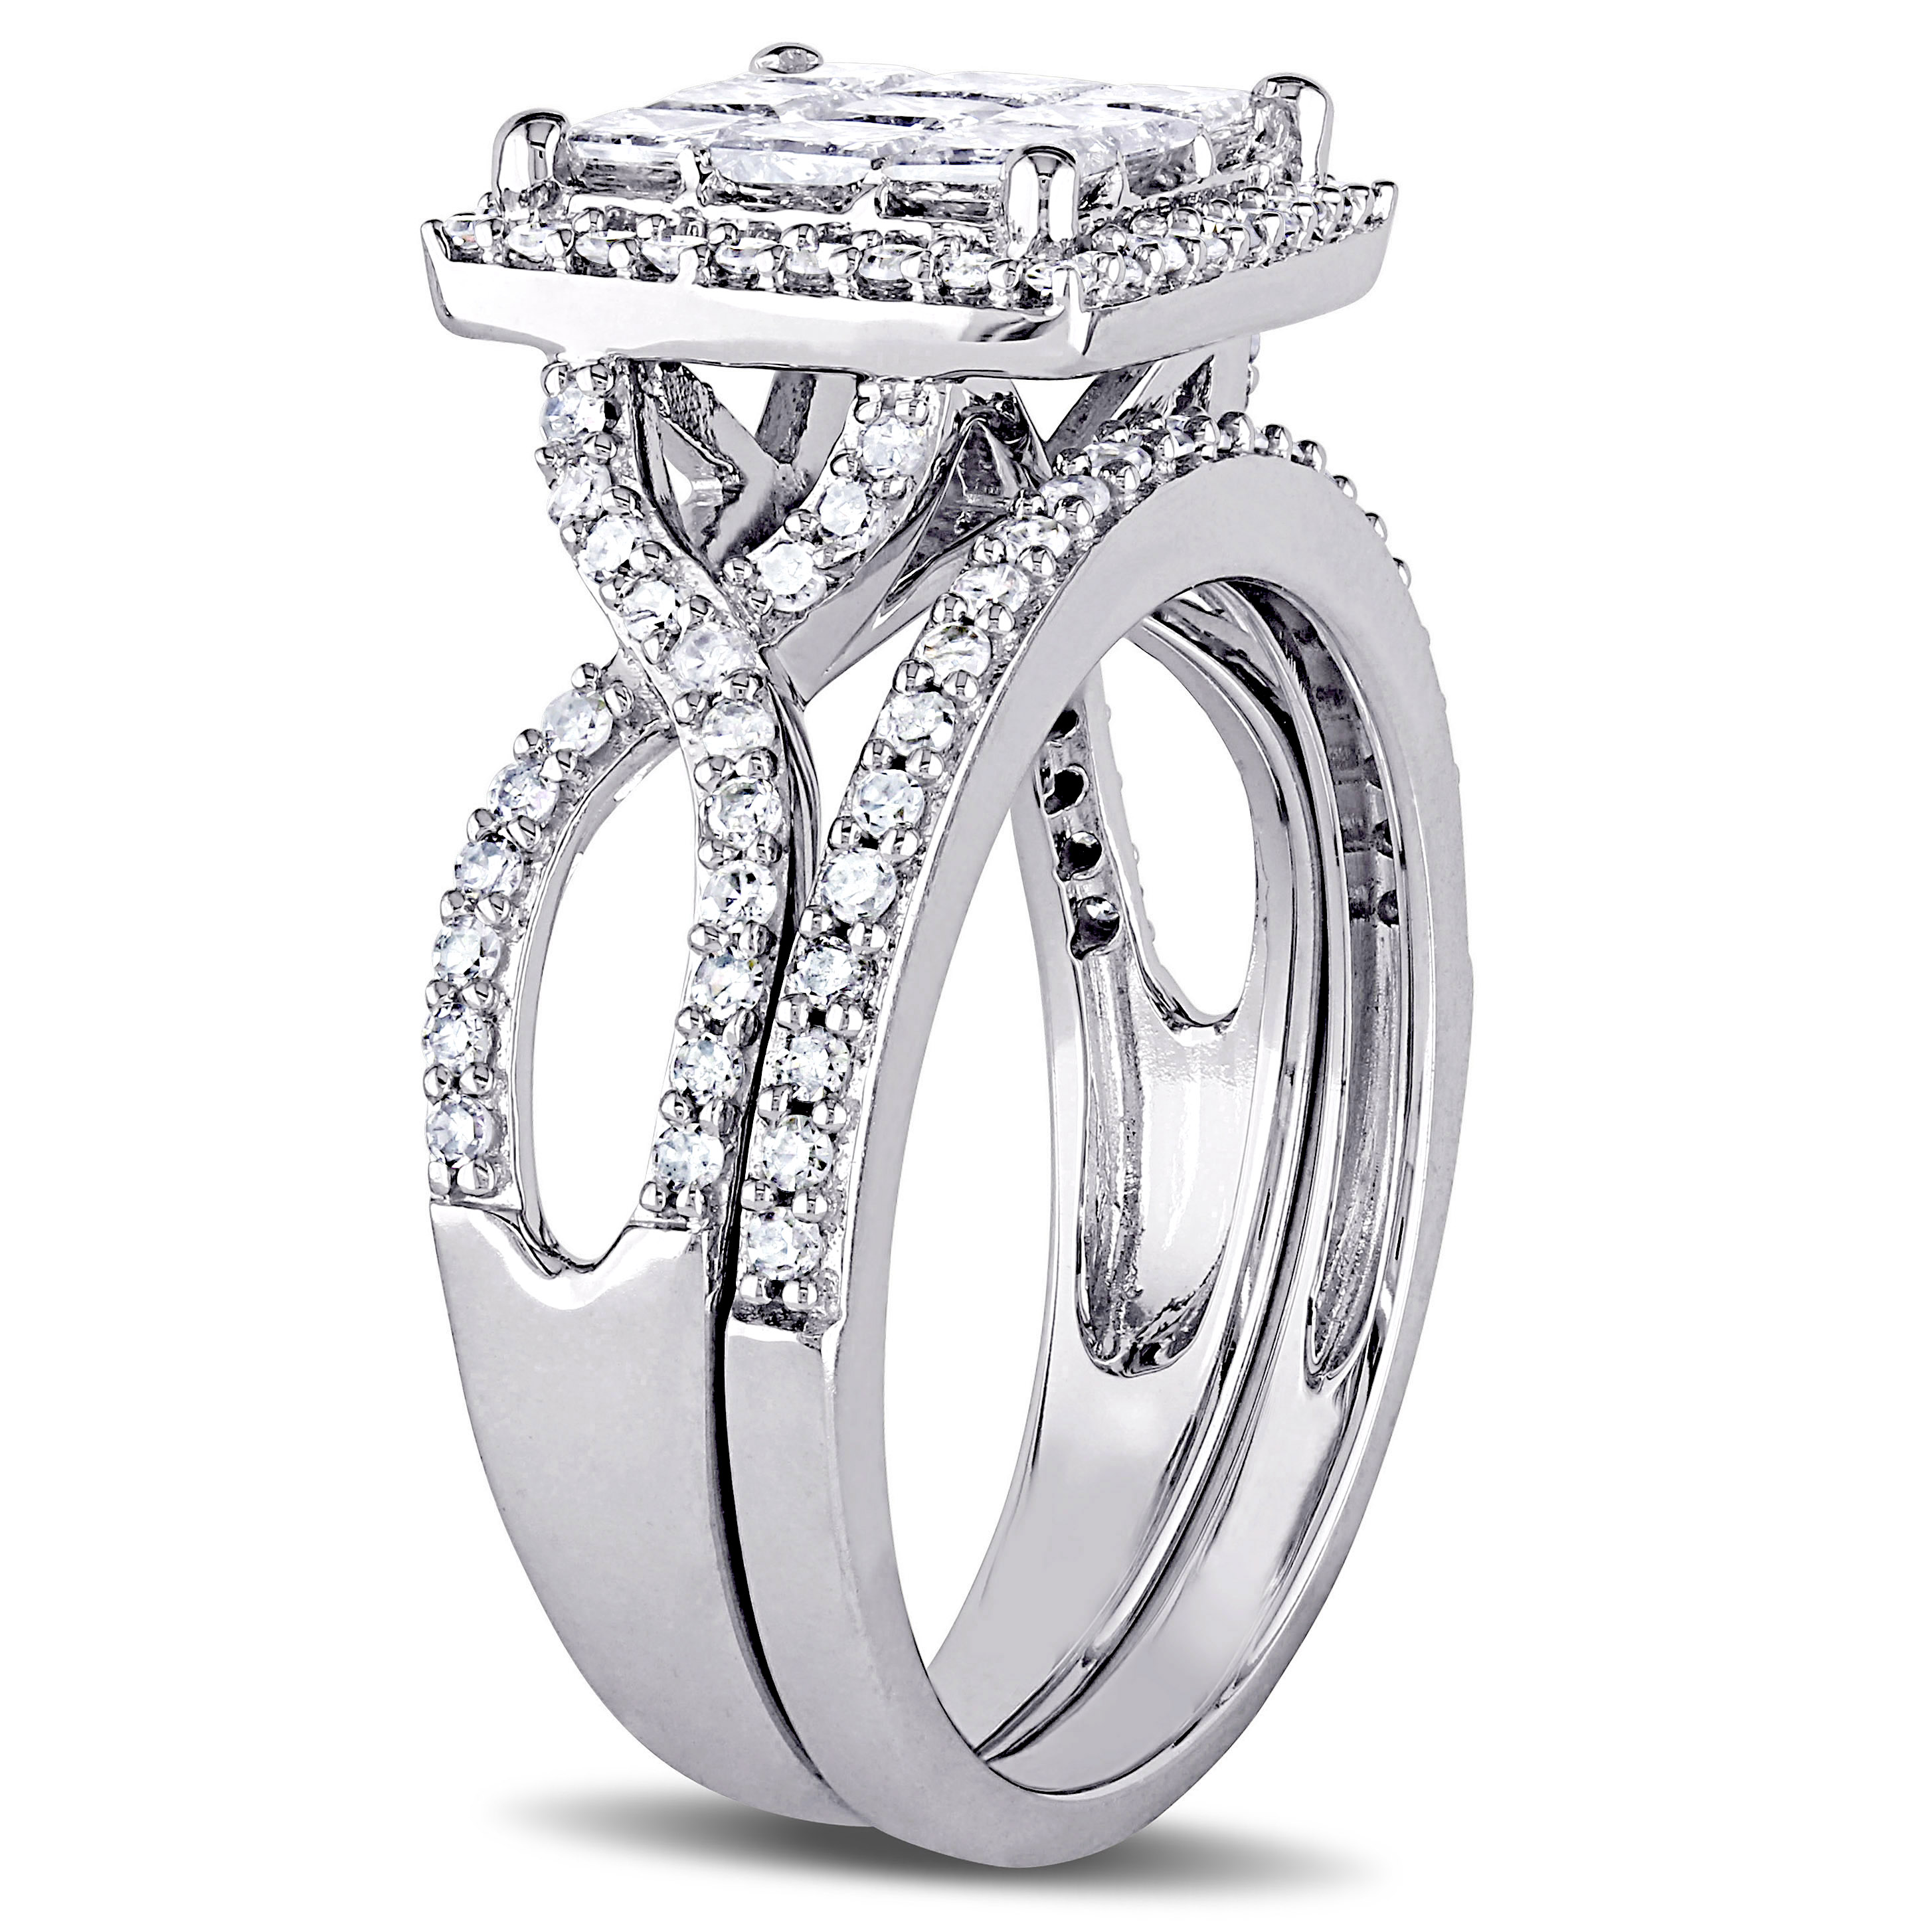 1 1/2 CT TW Princess Cut Halo Diamond Bridal Set in 10k White Gold